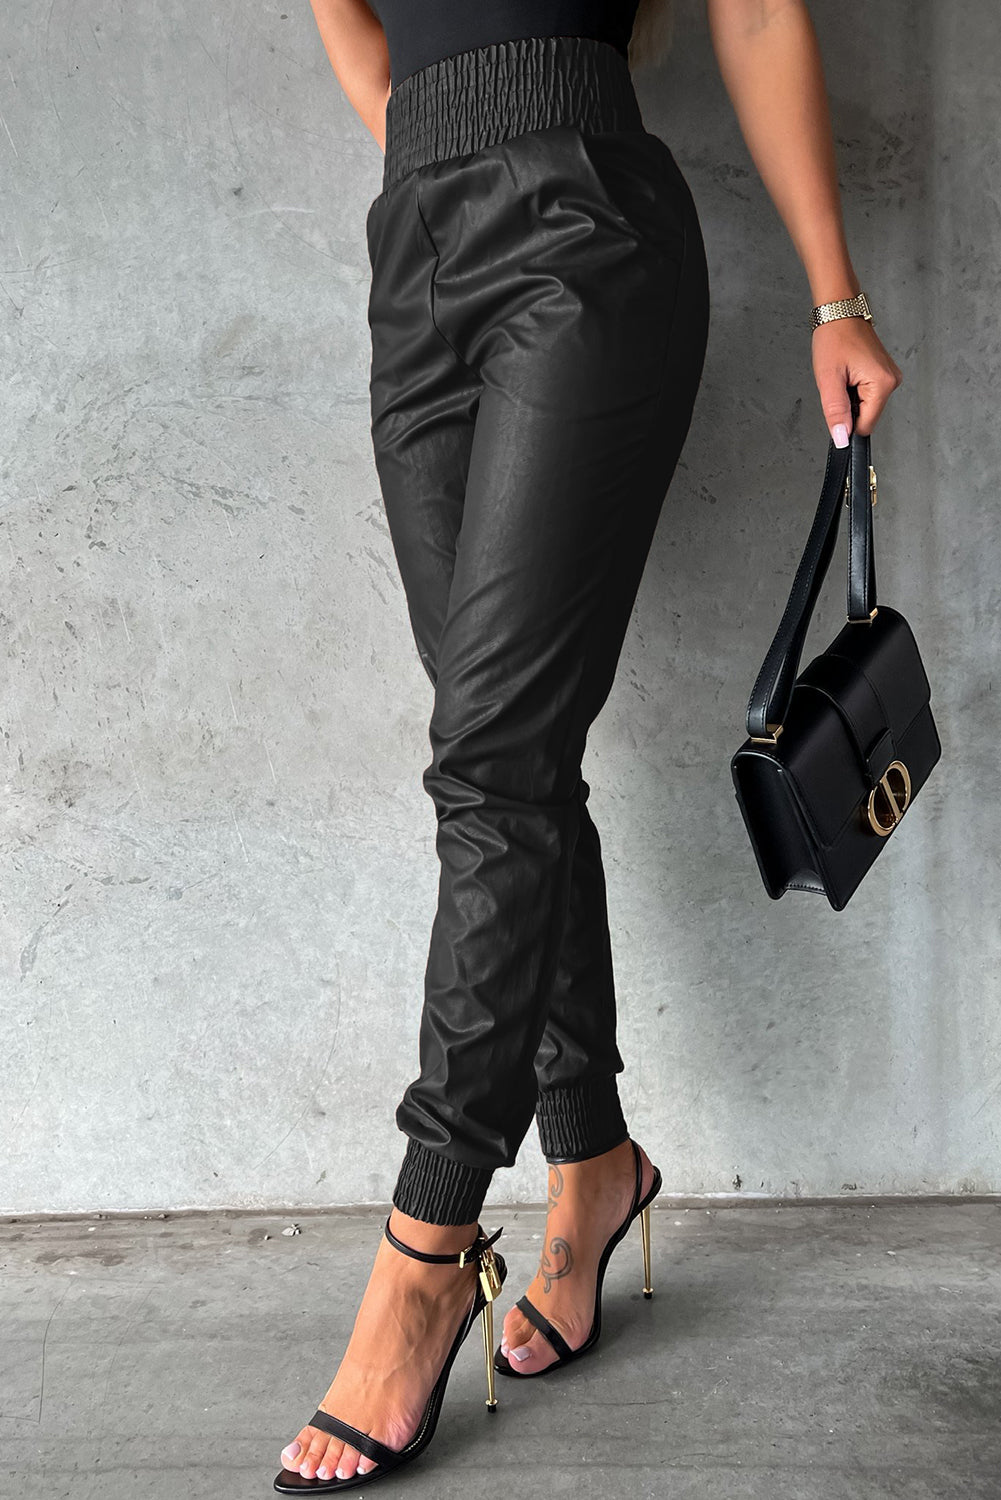 Brown Smocked High-Waist Leather Skinny Womens Pants - US2EInc Apparel Plug Ltd. Co